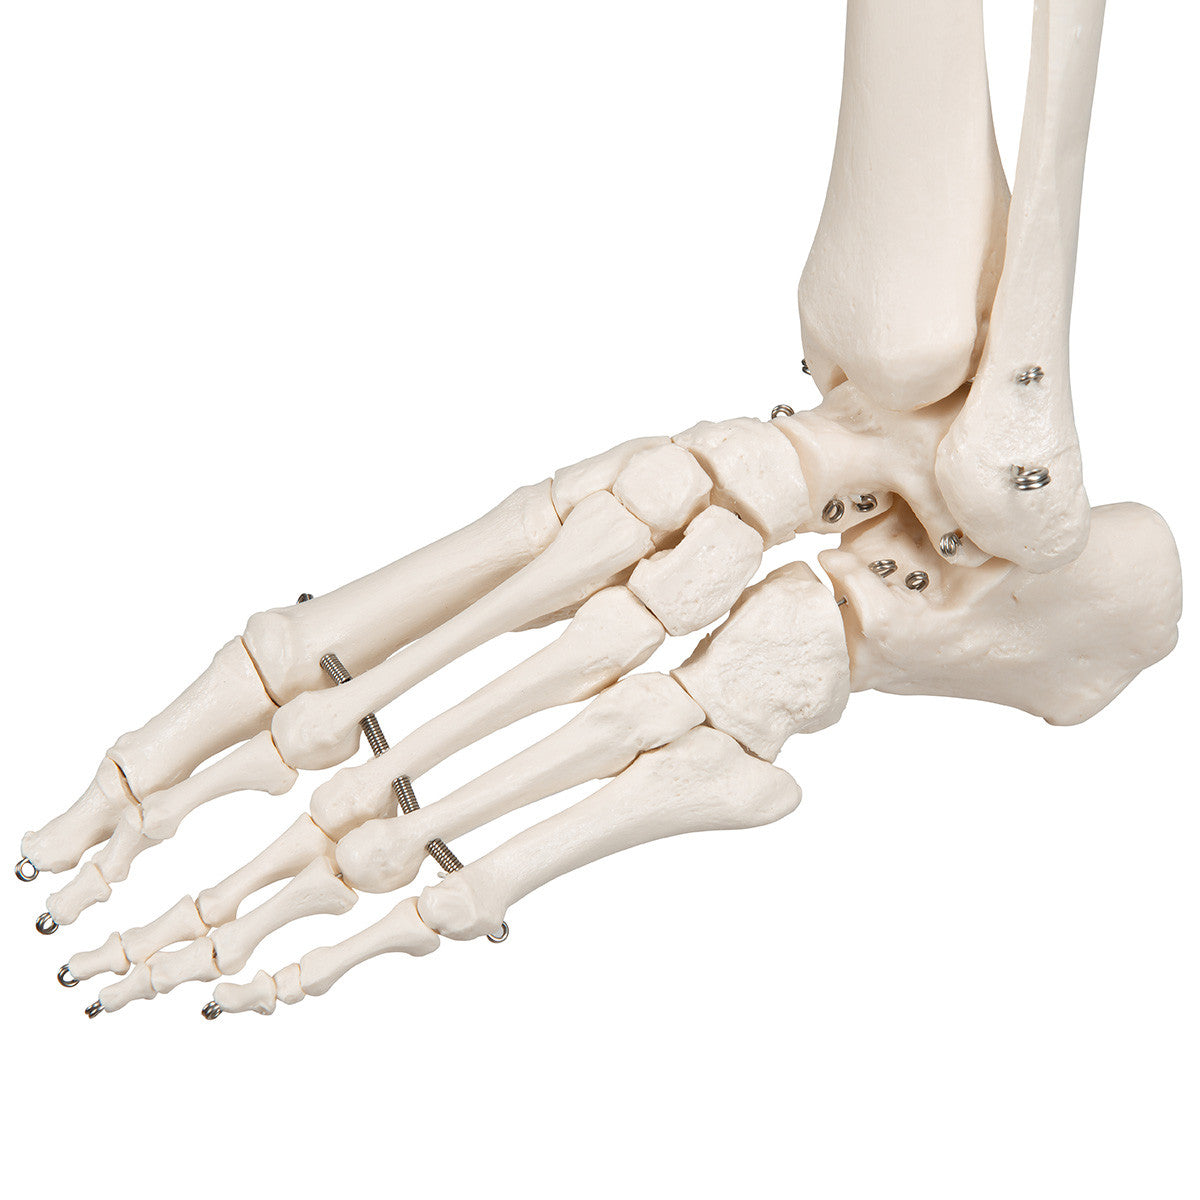 A10_07_1200_1200_Human-Skeleton-Model-Stan-3B-Smart-Anatomy__61158.1603562778.1280.1280.jpg